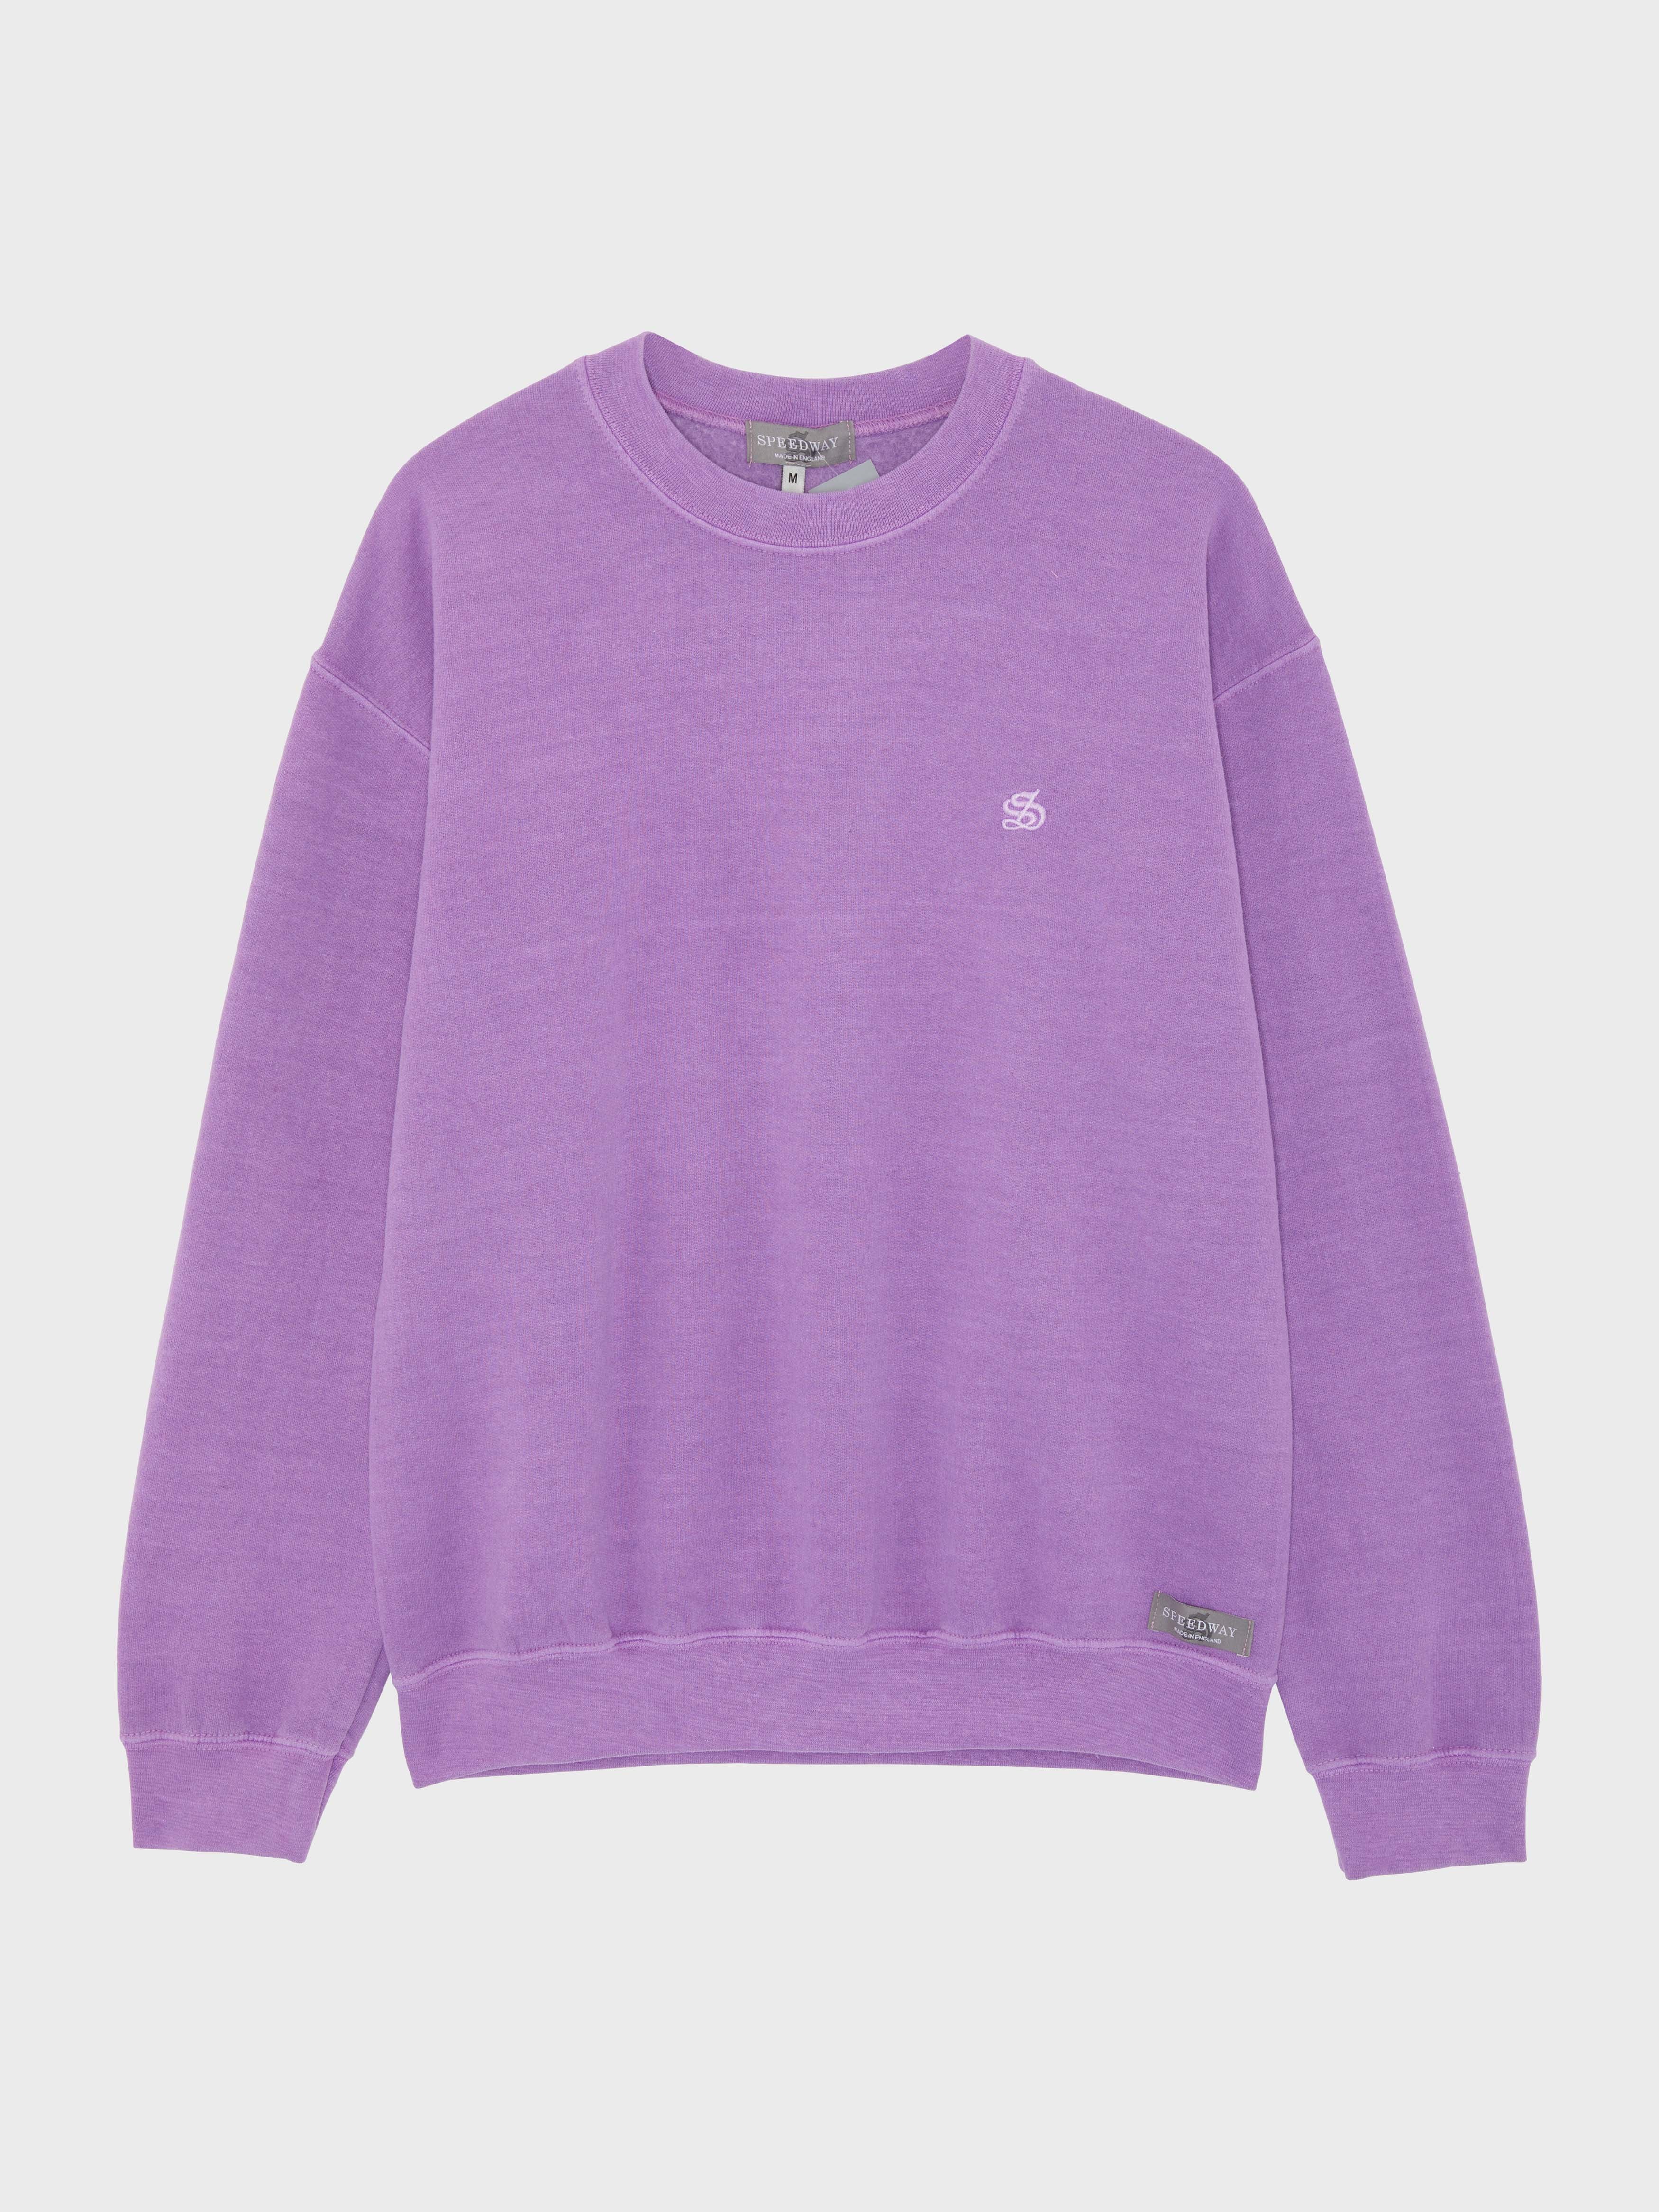 Speedway Classic Sweatshirt - Vintage Violet